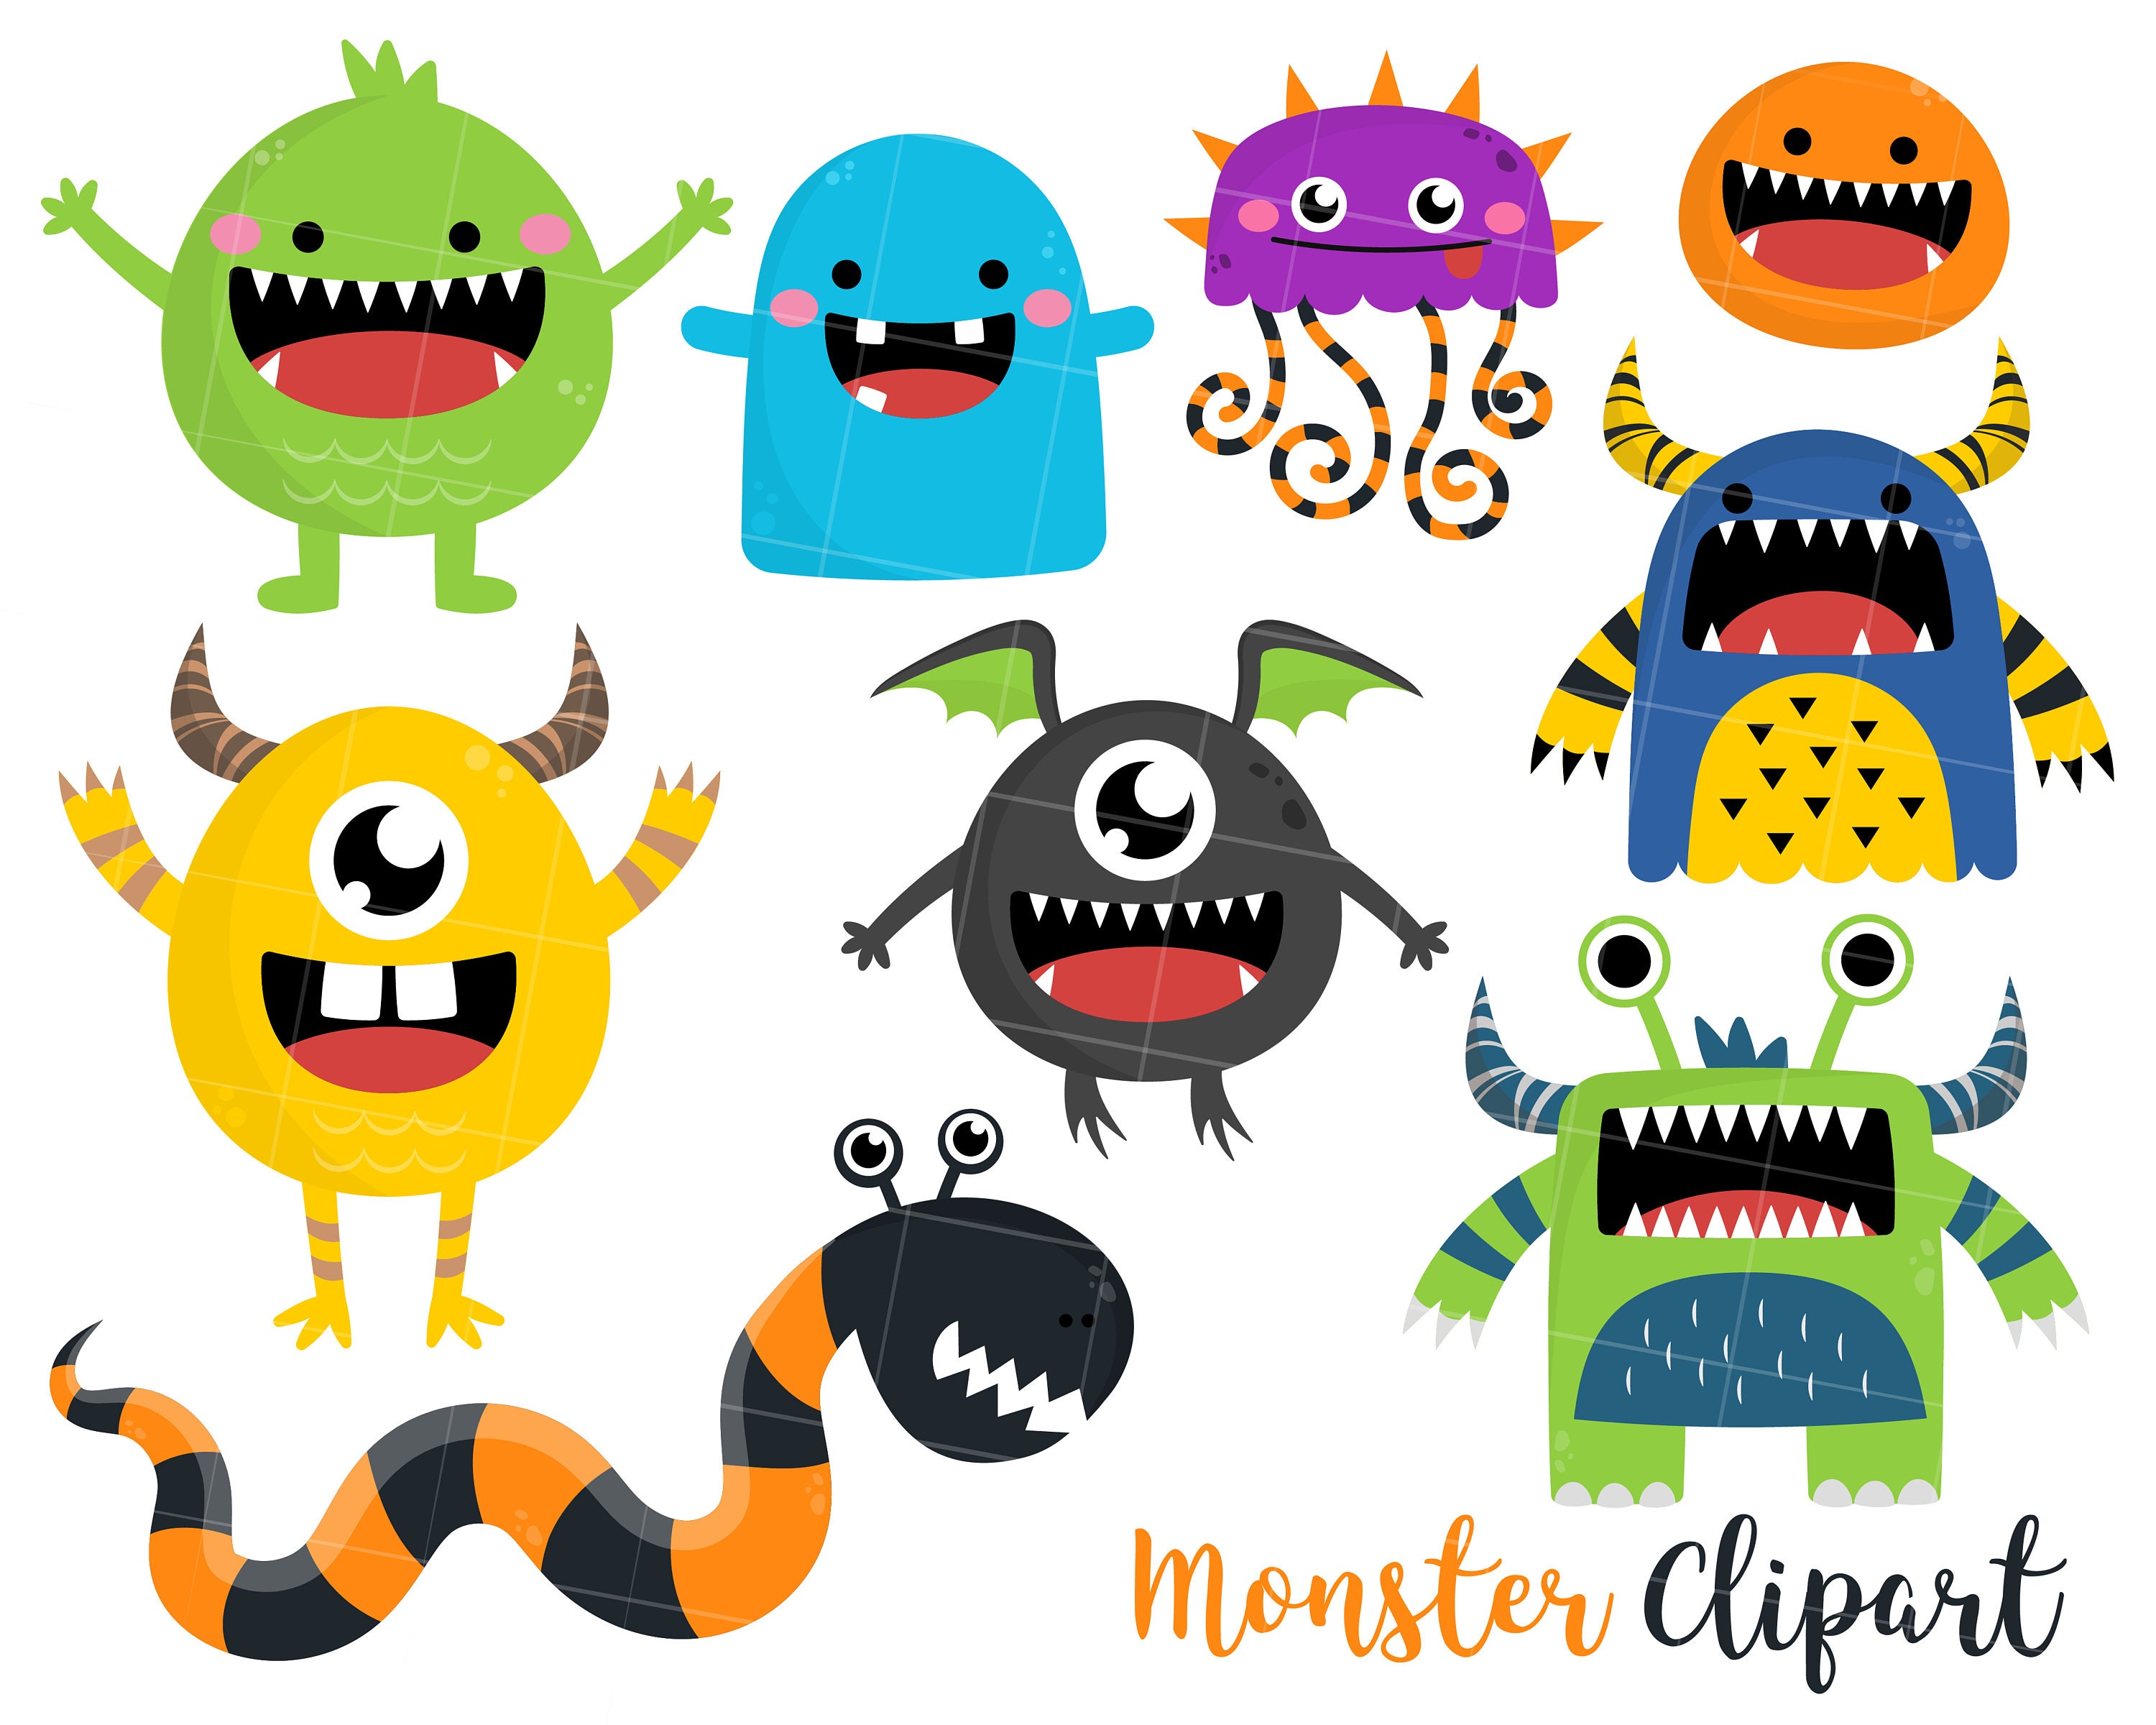 Cute Monster Clipart, Monster Clipart, Monster Clip art, Halloween Clipart,  Monster graphics, Snake clipart, commercial use